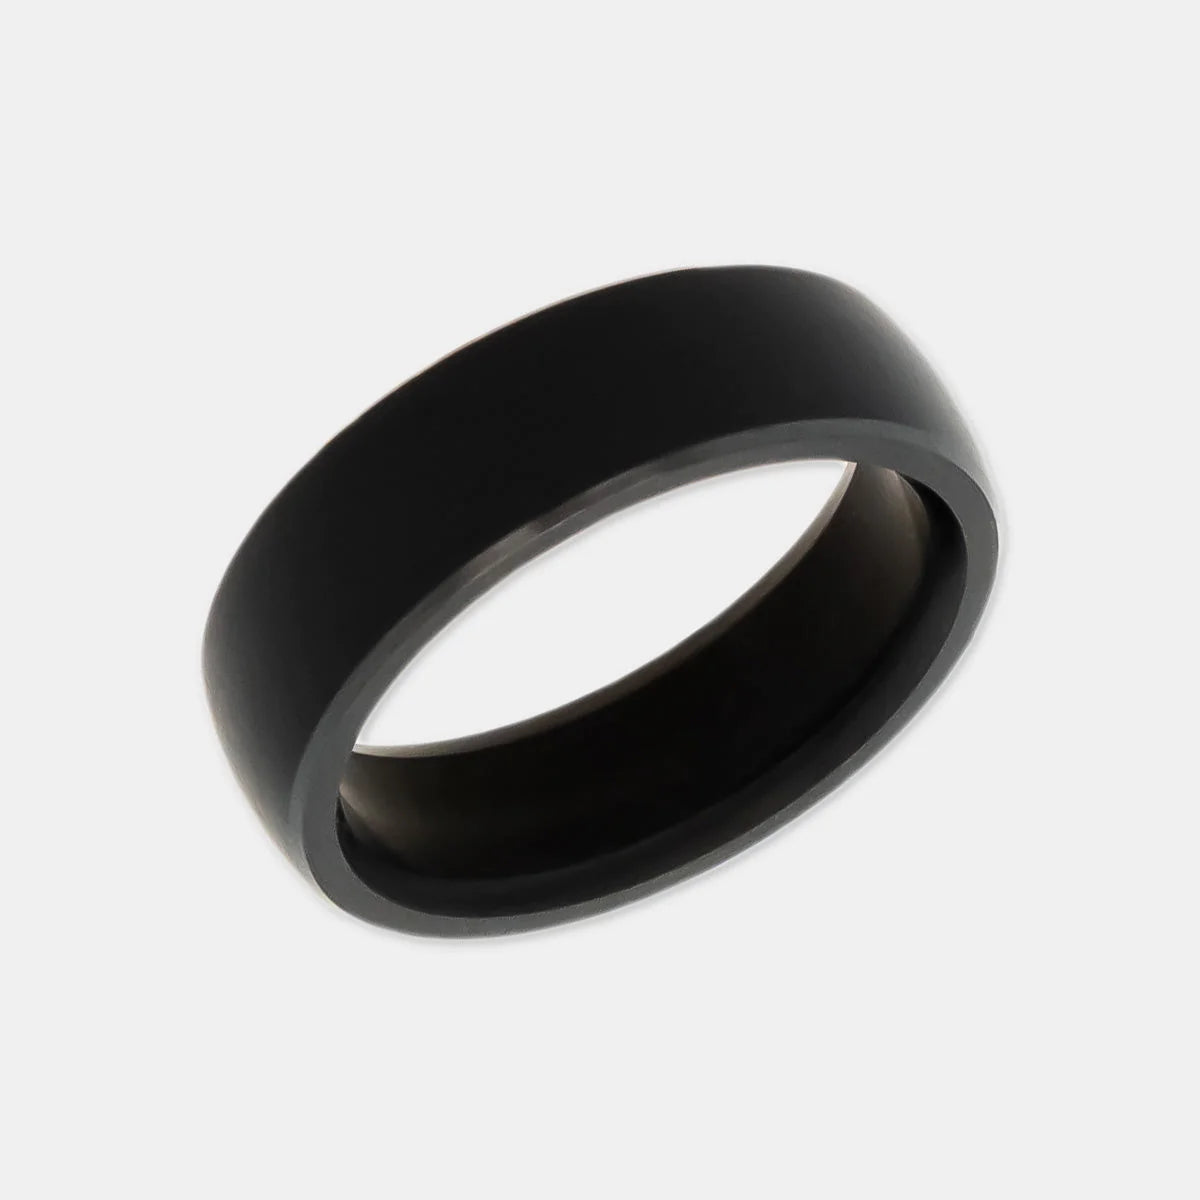 Solid Black Diamond 7mm Men's Wedding Ring on White Background | Elysium Black Diamond Ring - Elysium NYX 7mm - Solid Black Diamond Ring | Products | Image 1